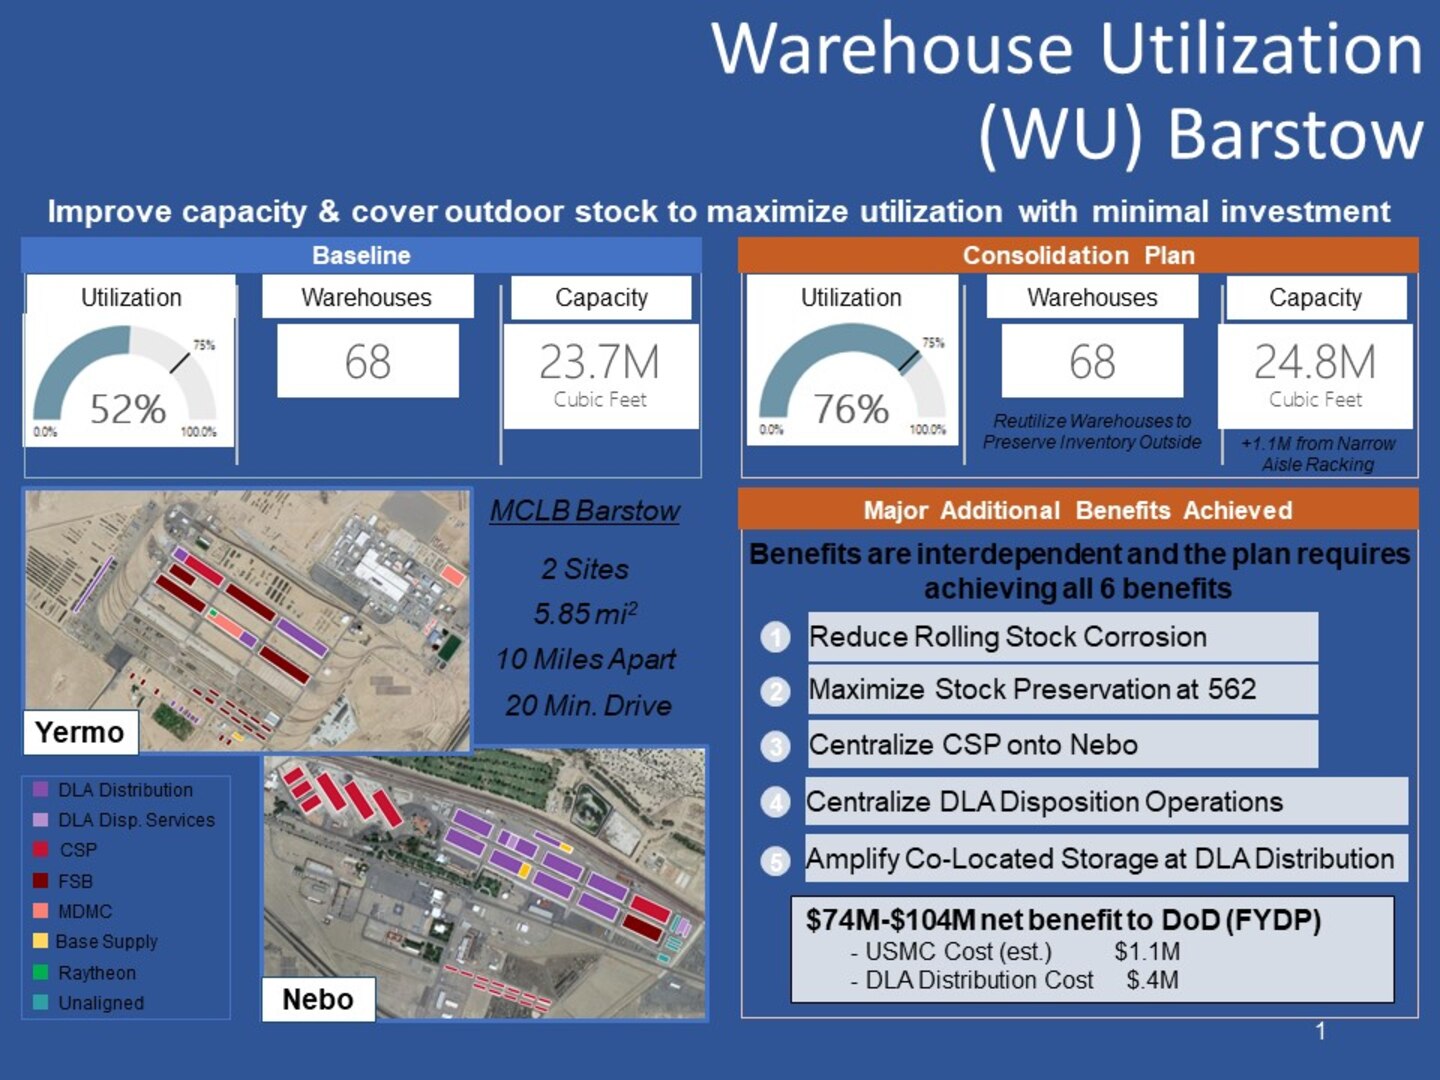 DLA Distribution warehouse utilization saves Marines millions